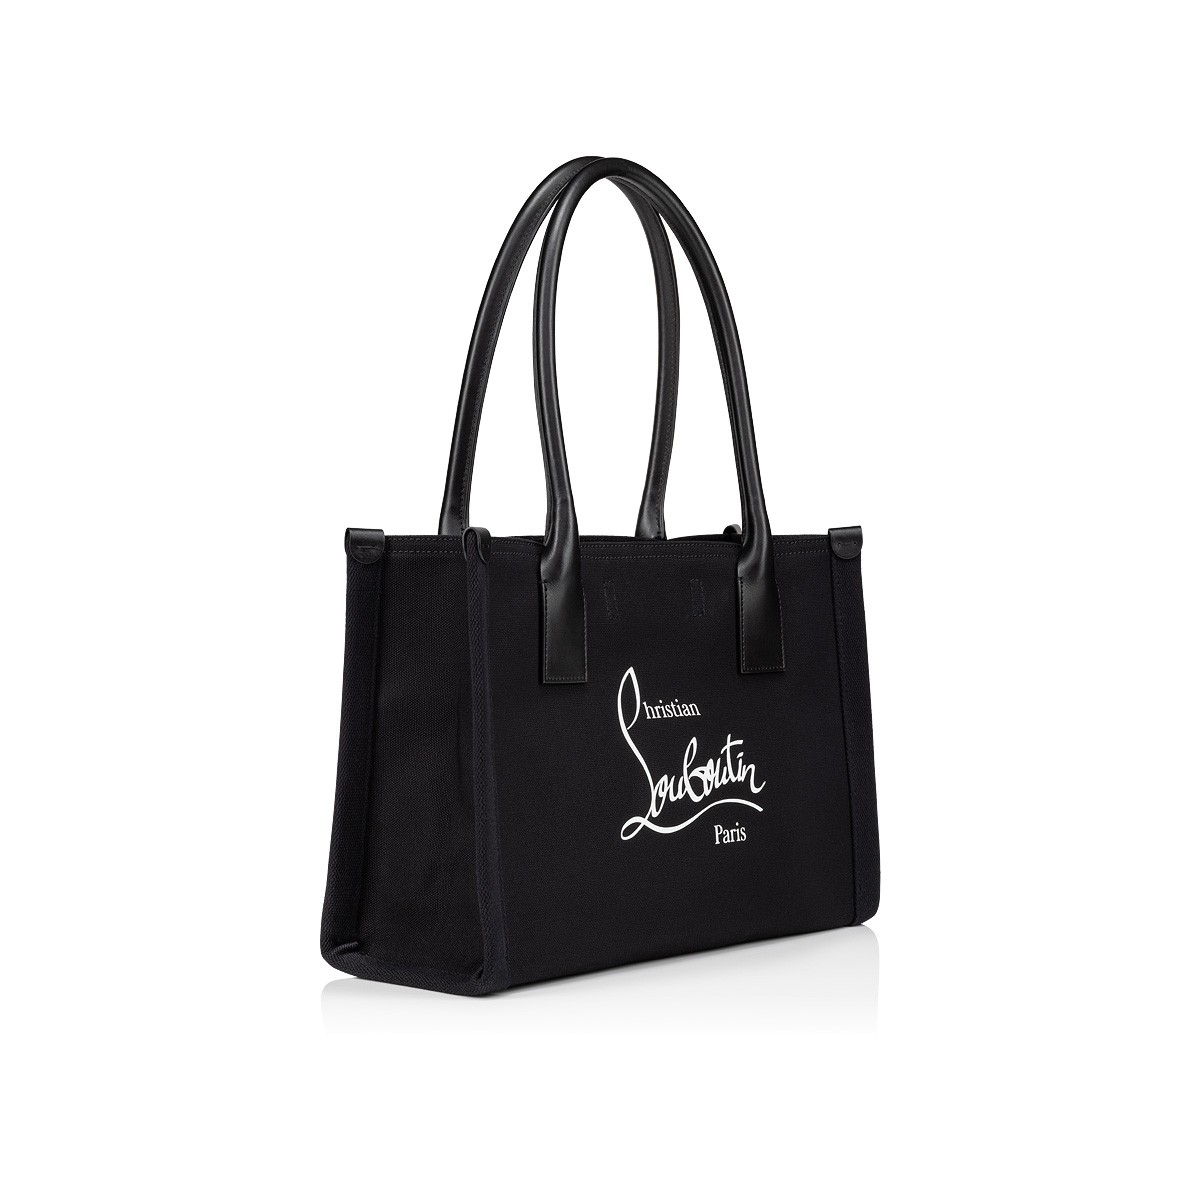 Nastroloubi E/W small Black Creative fabric - Handbags - Christian ...